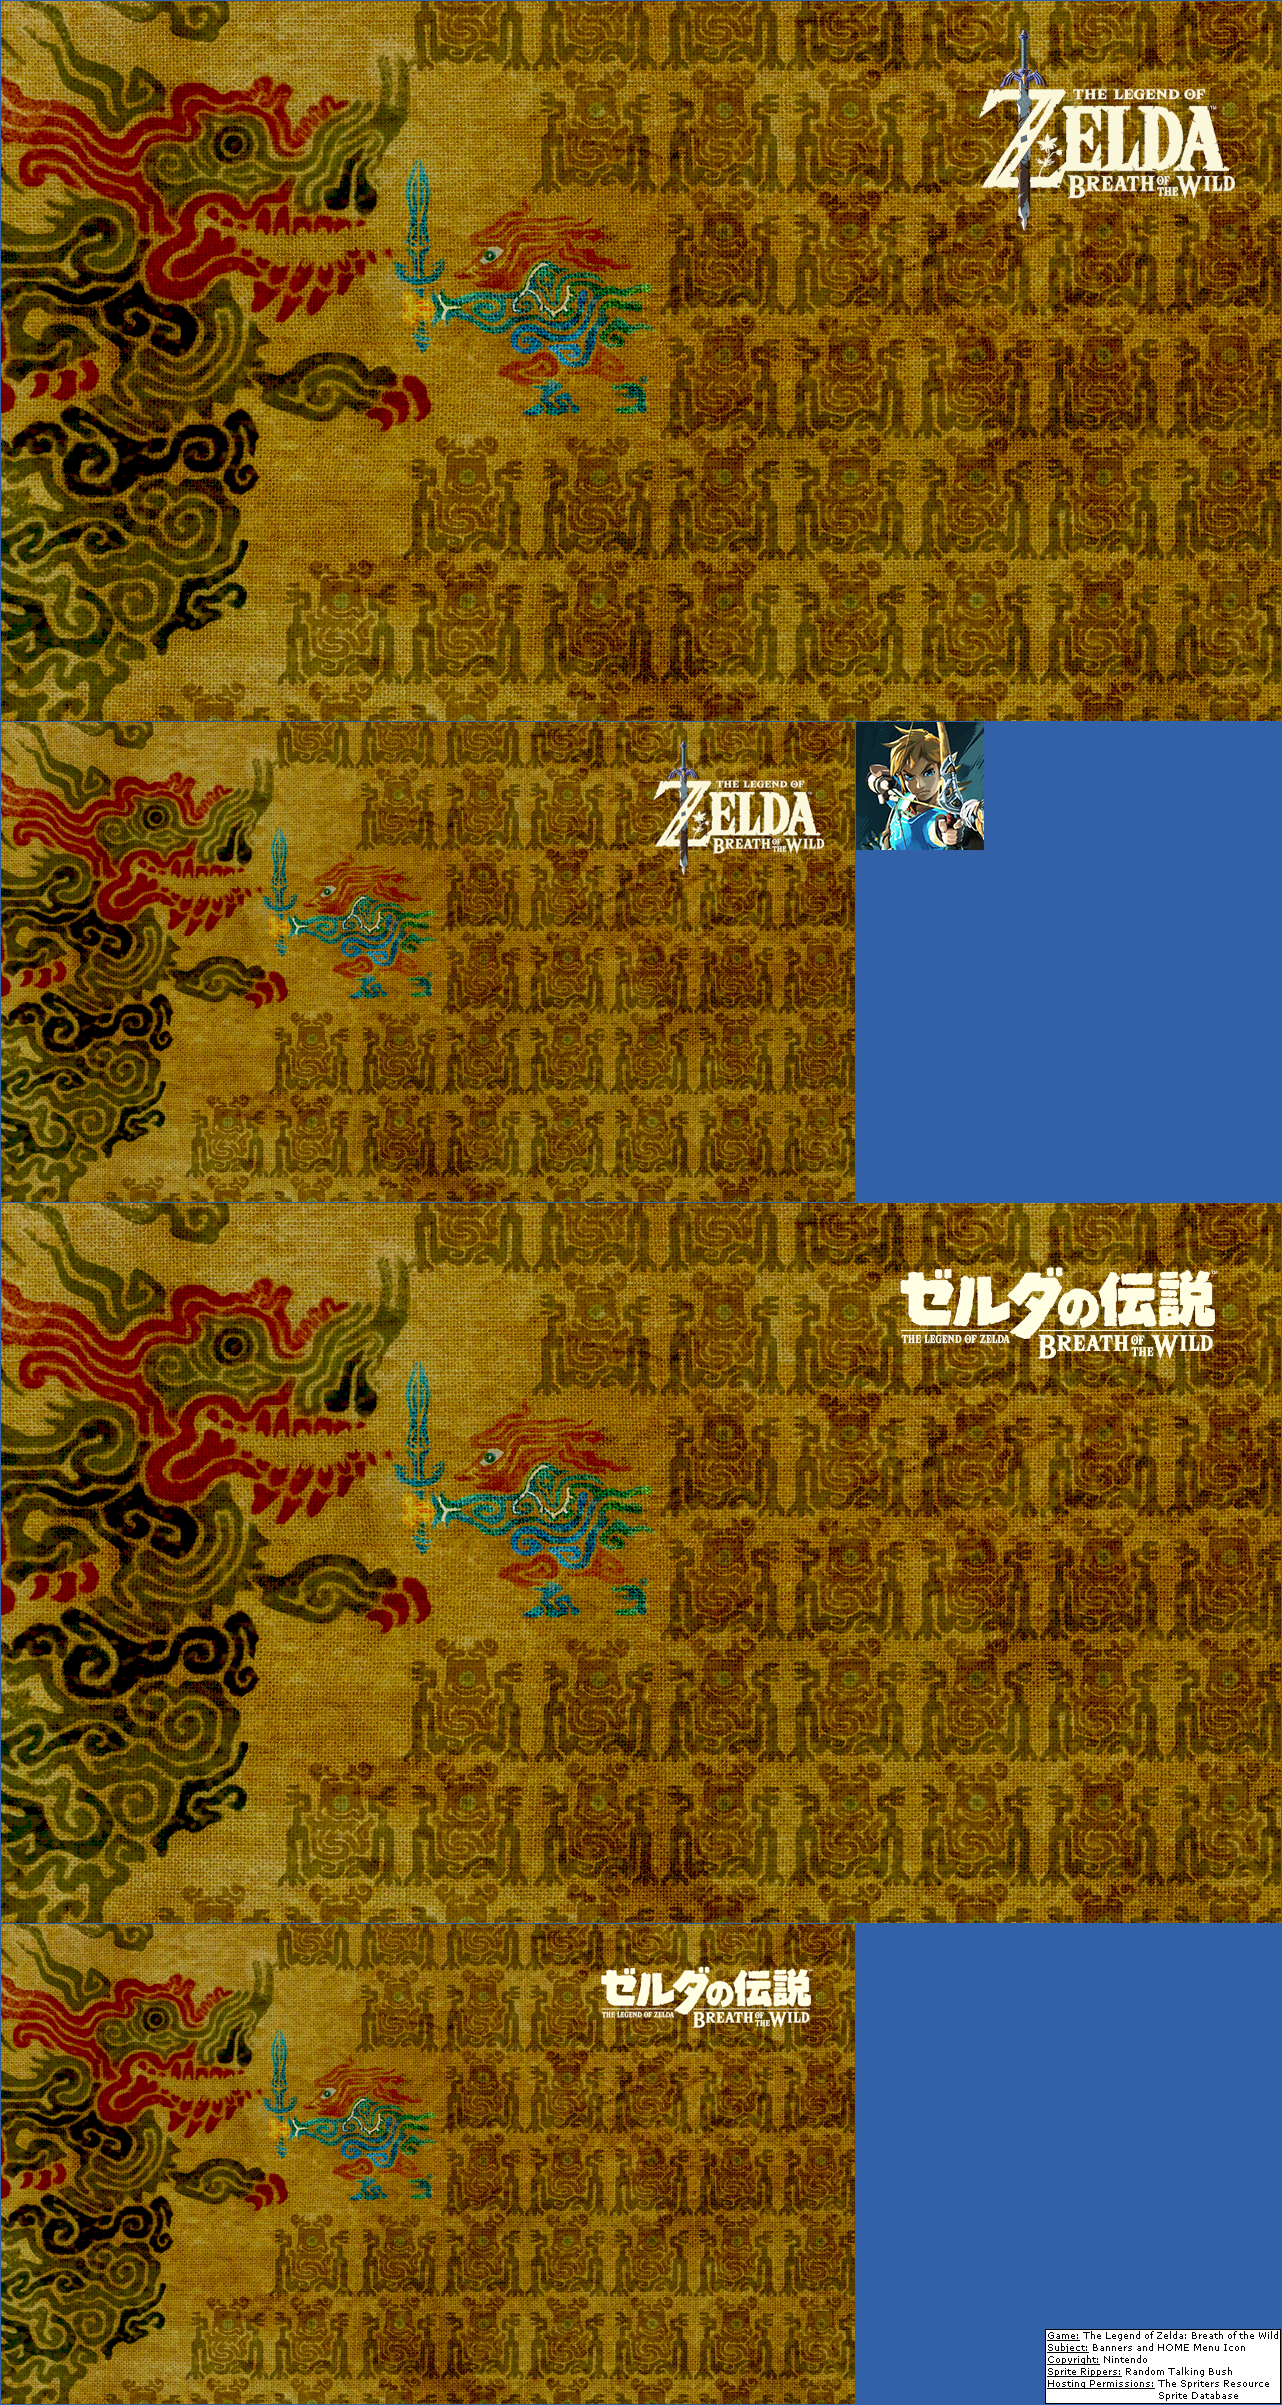 Taiko buik gebrek Openbaren Wii U - The Legend of Zelda: Breath of the Wild - Banners and HOME Menu  Icon - The Spriters Resource